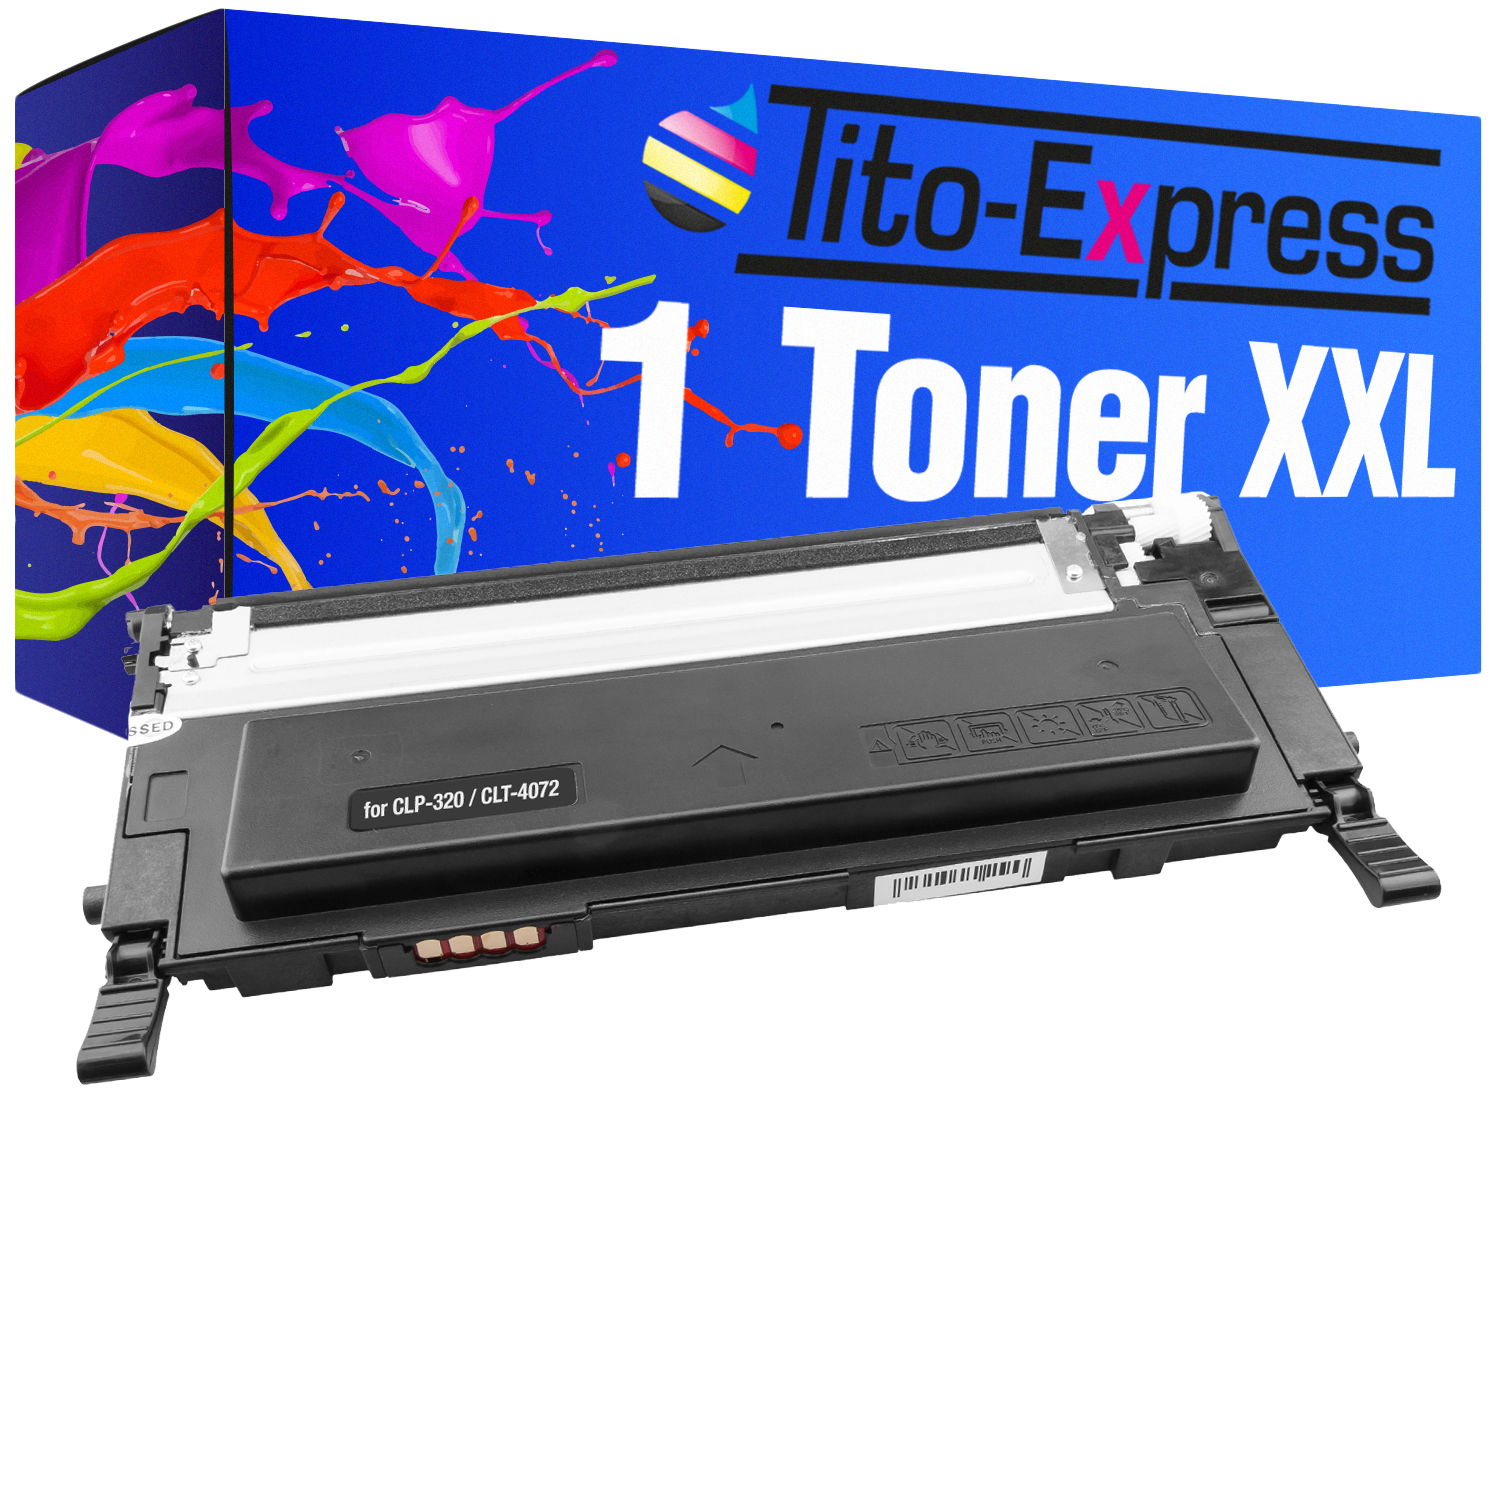 (SU128A) PLATINUMSERIE Toner CLT-4072S Samsung ersetzt black Toner TITO-EXPRESS 1